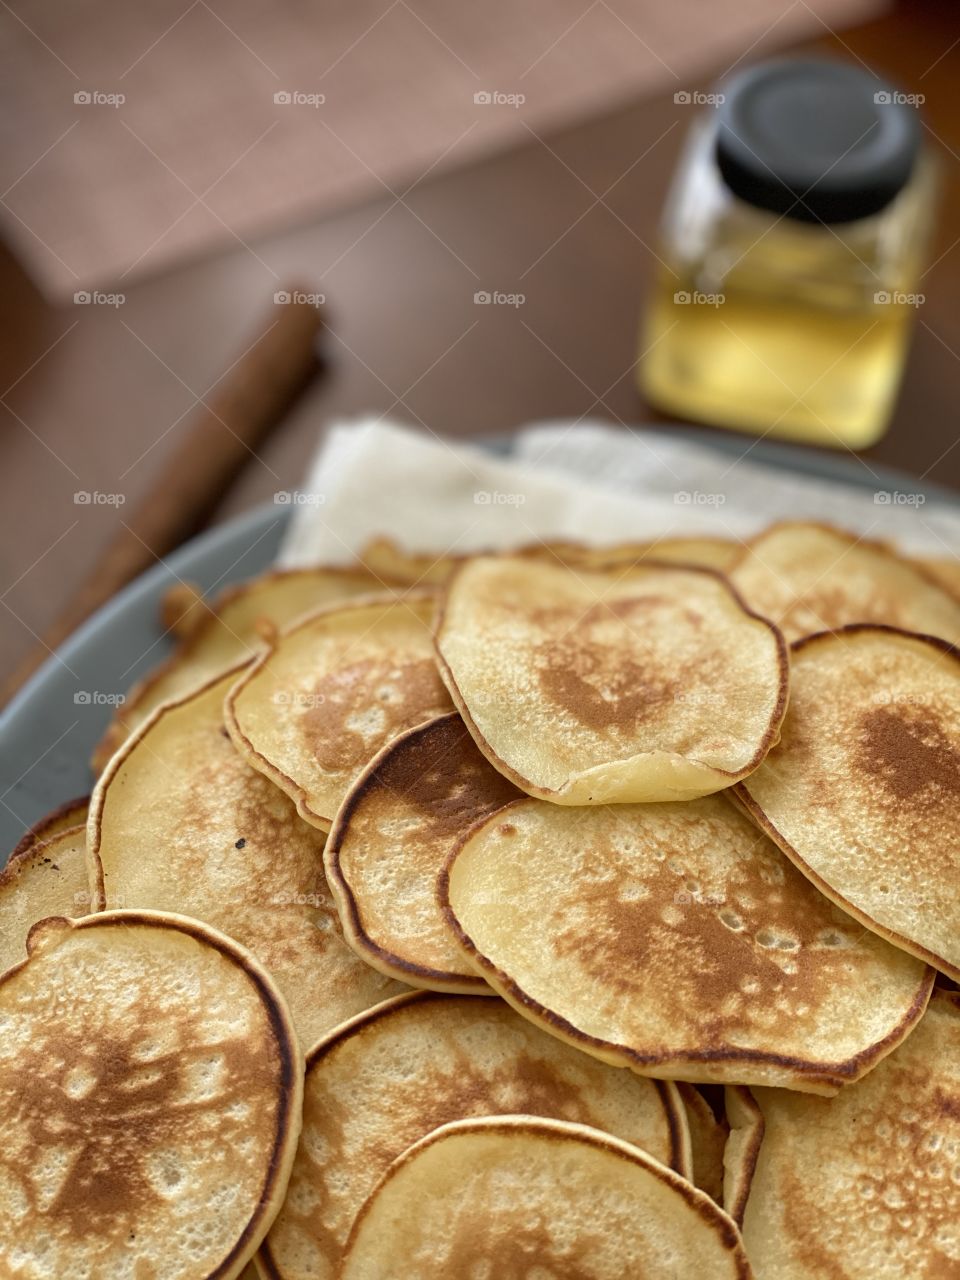 Pancakes for breakfast is always a good idea